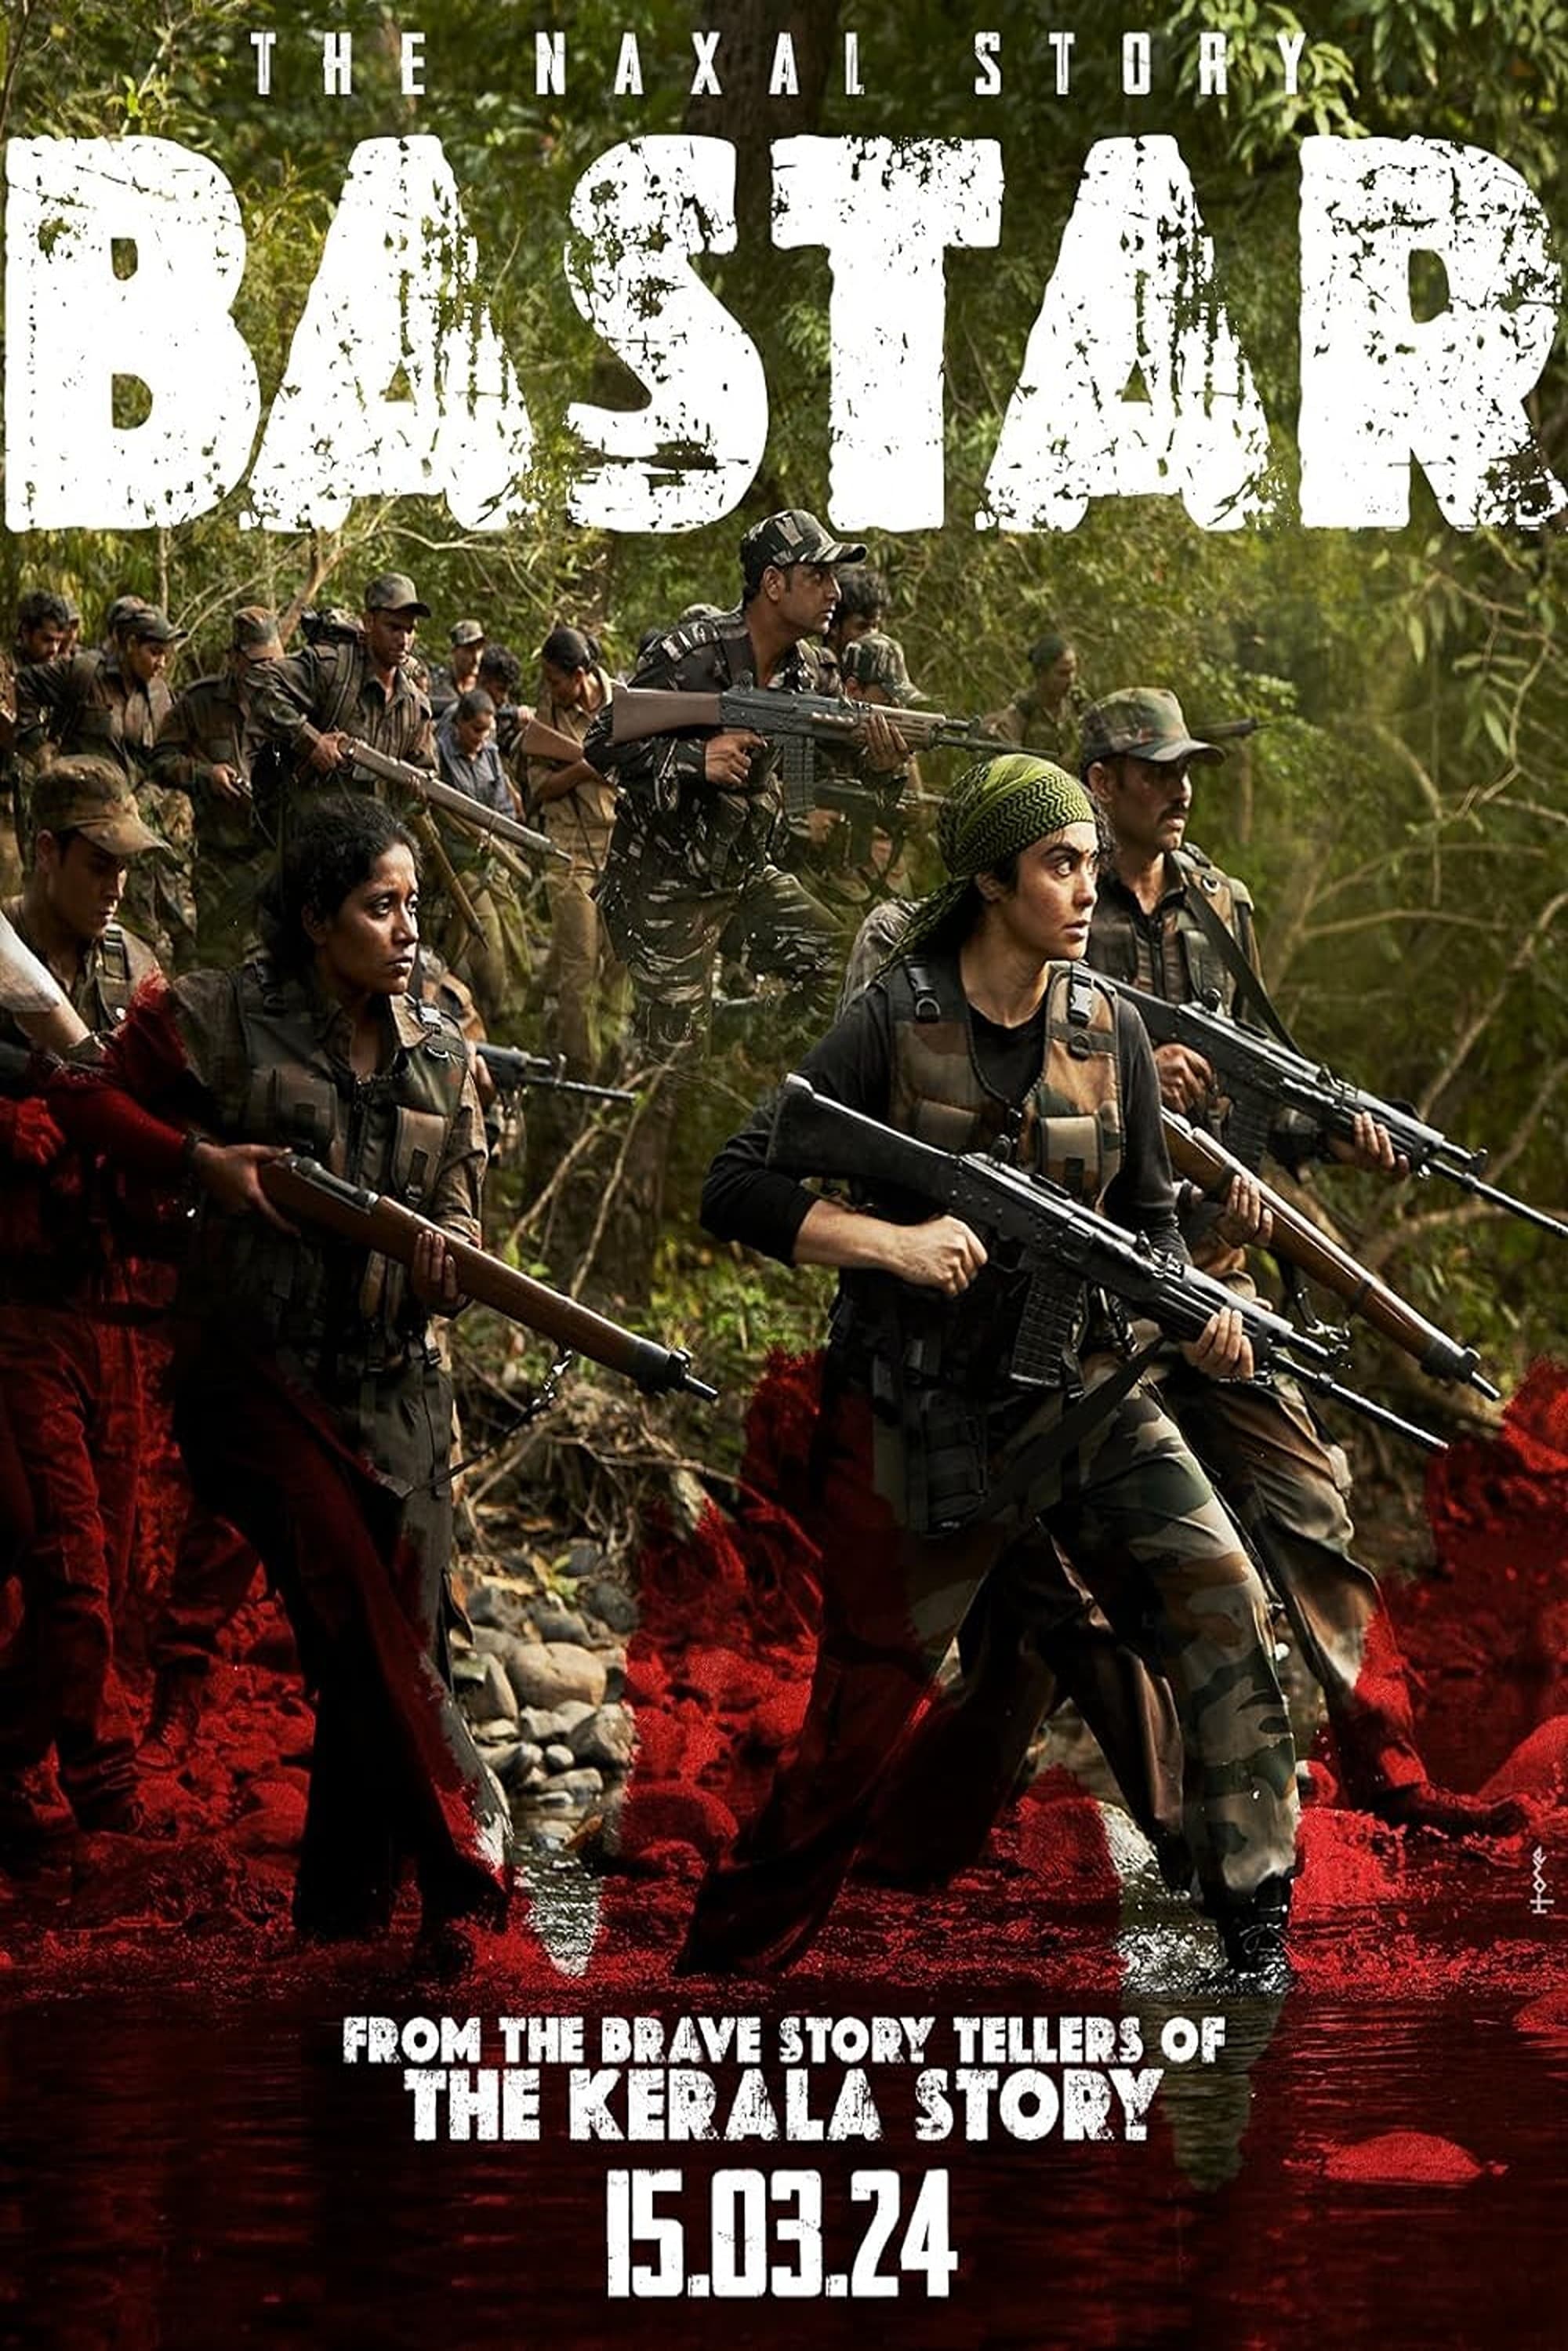 Poster for the movie "Bastar: The Naxal Story"